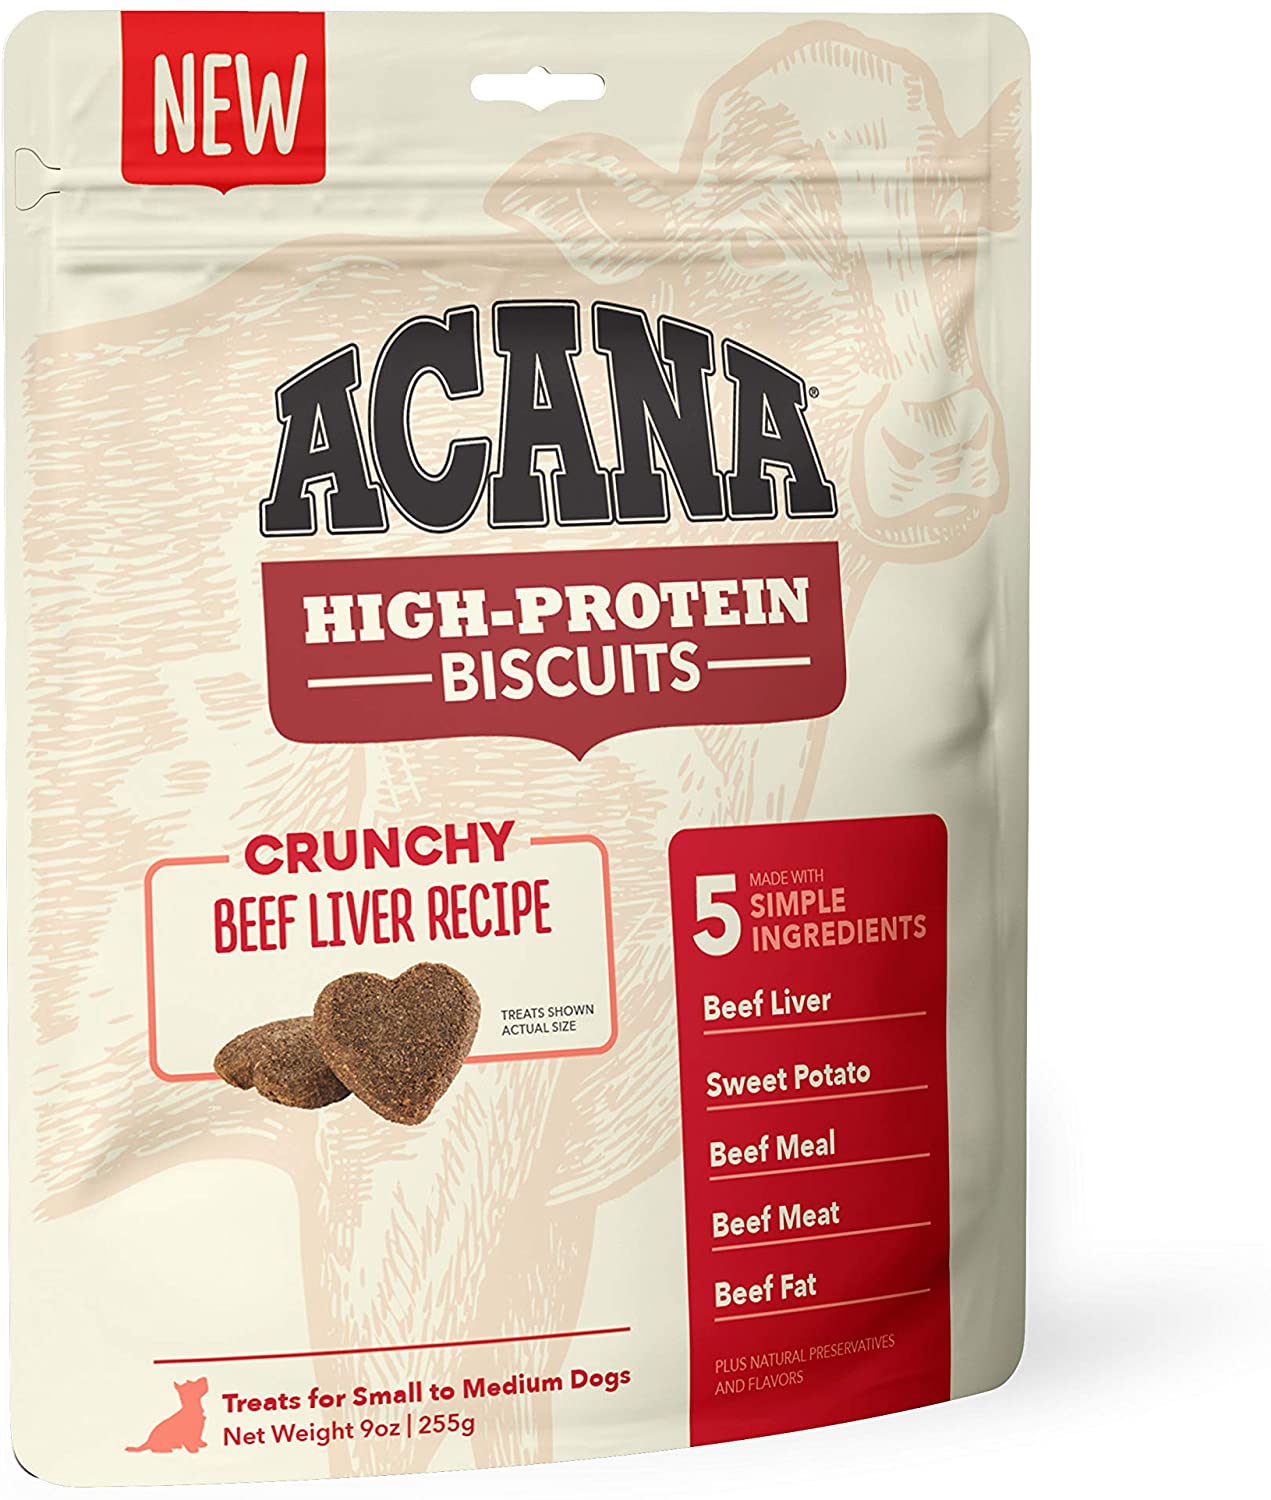 ACANA High-Protein Biscuits, Crunchy Beef Liver Recipe - 9oz